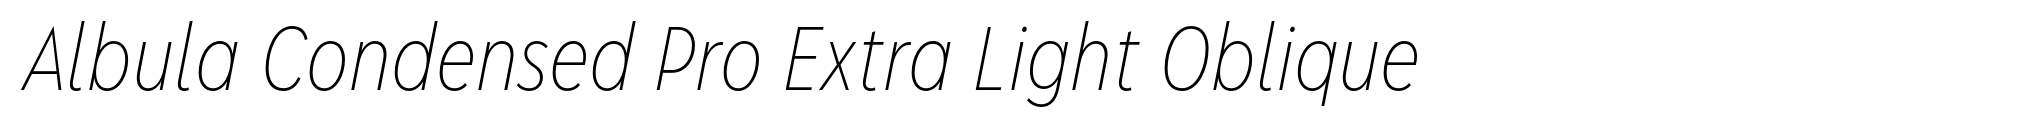 Albula Condensed Pro Extra Light Oblique image